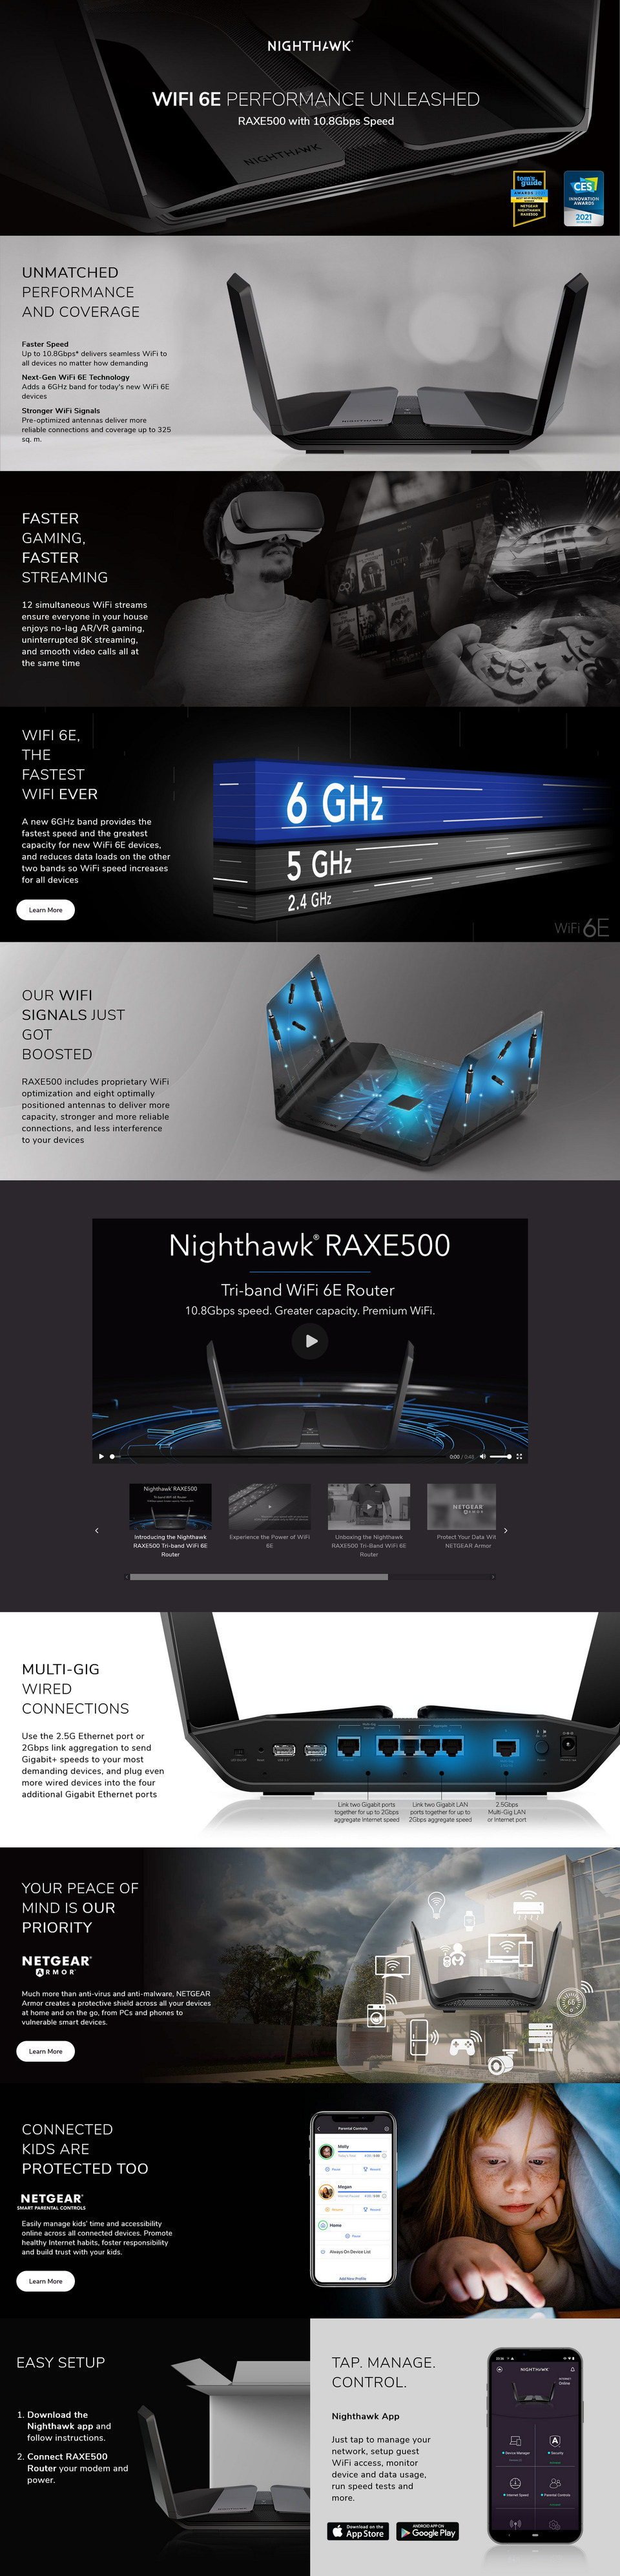 netgear nighthawk 12-stream wireless-axe1100 gigabit router raxe500